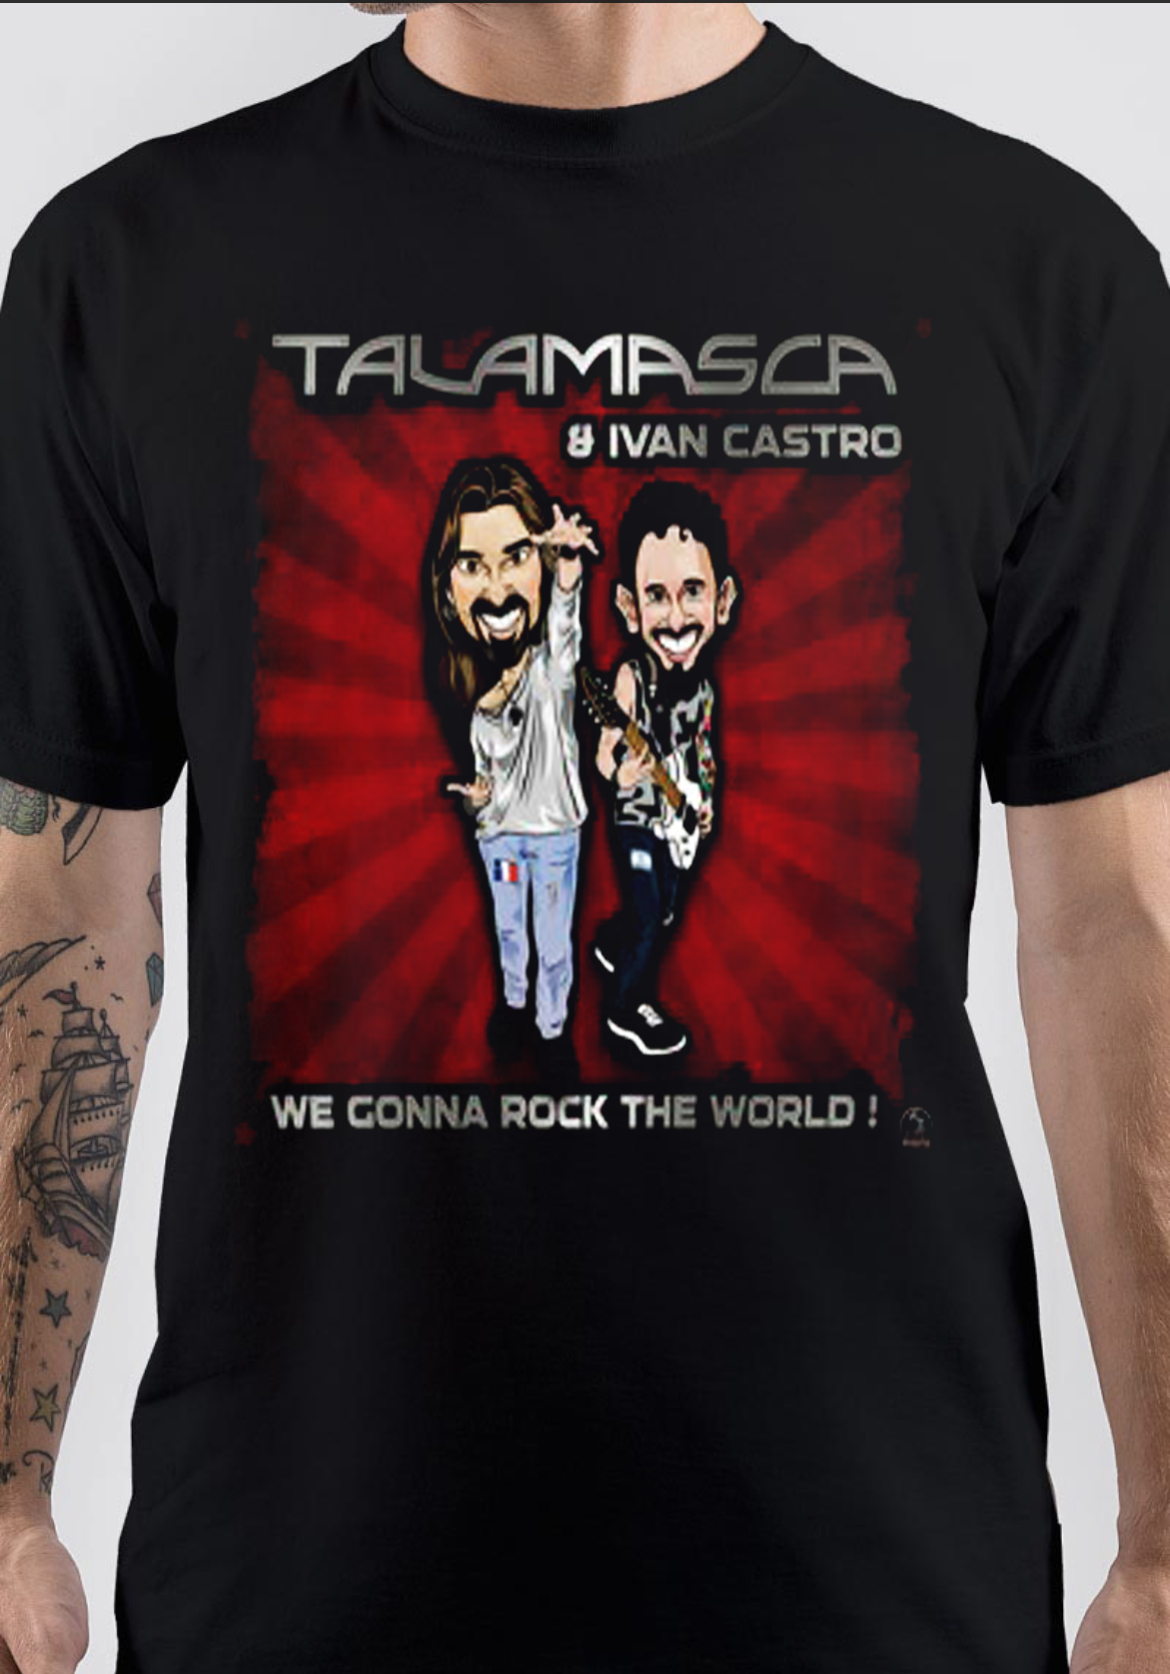 Talamasca T-Shirt And Merchandise